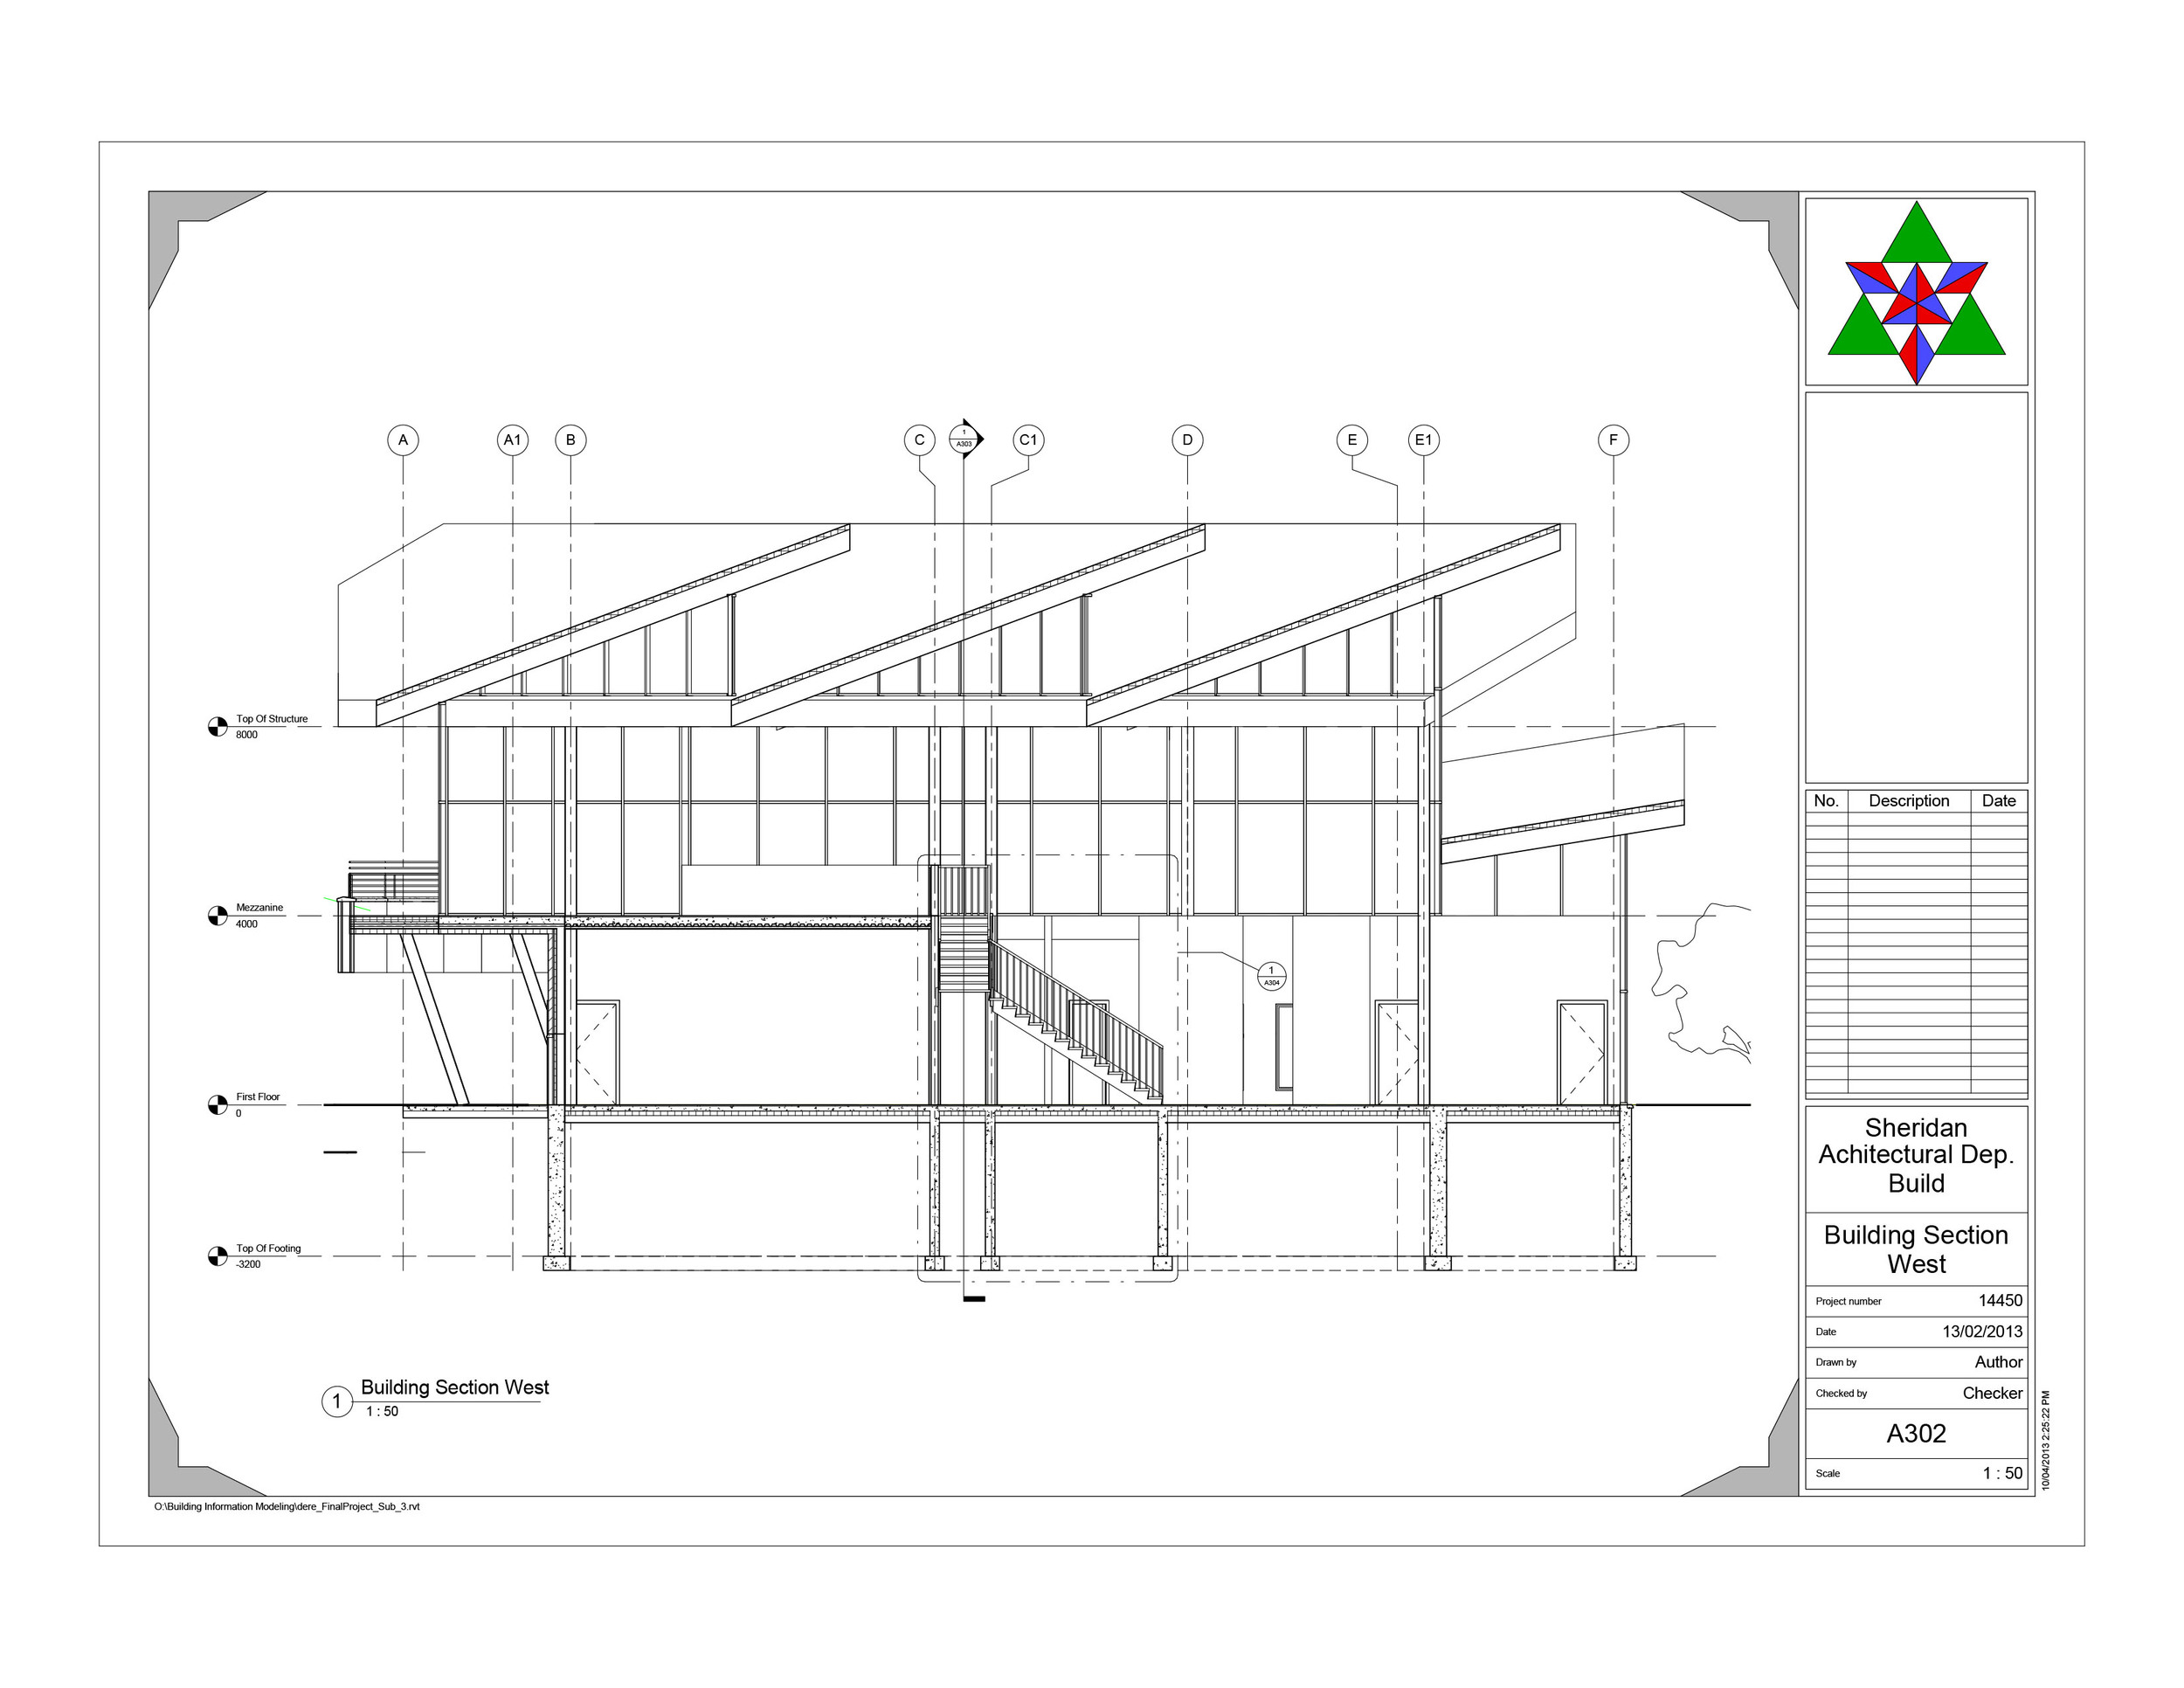 dere_FinalProject  - Sheet - A302 - Building Section West.jpg